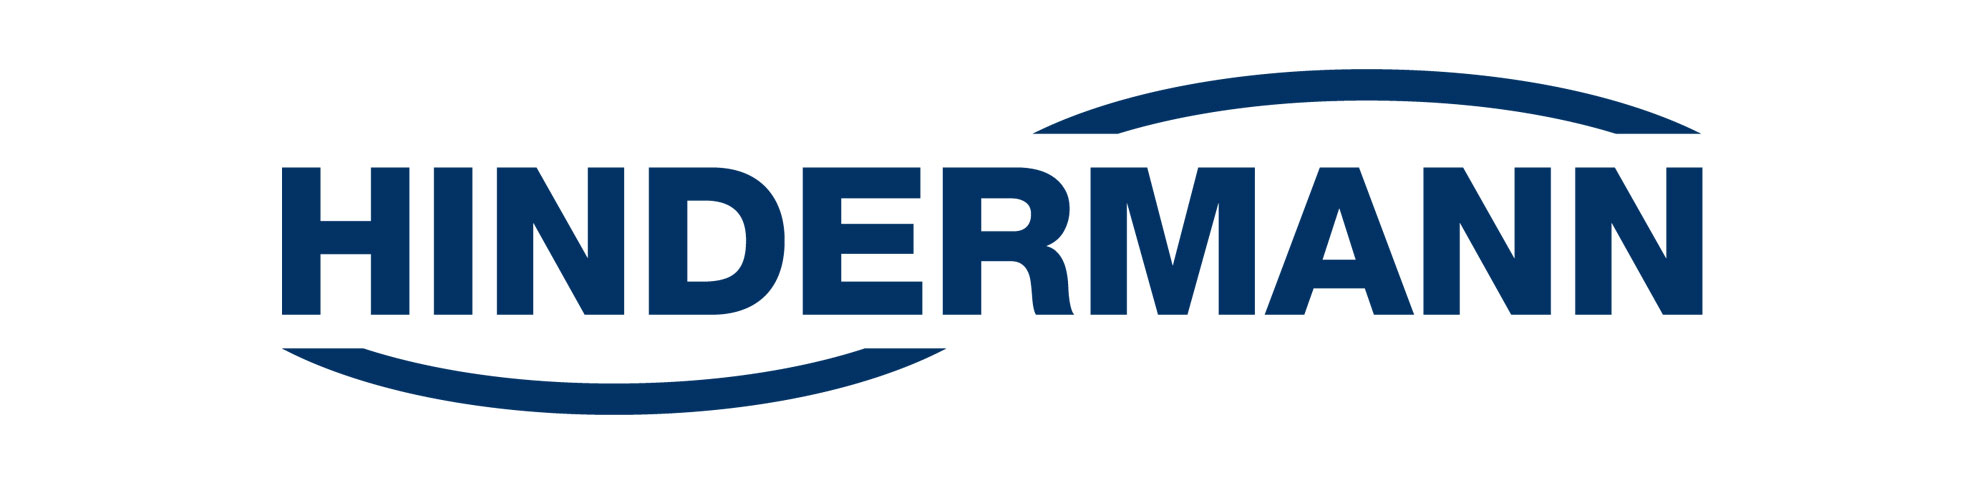 Hindermann – a brand product Unser Markenprodukt: Schutzhüllen, deutsche Qualität | HINDERMANN